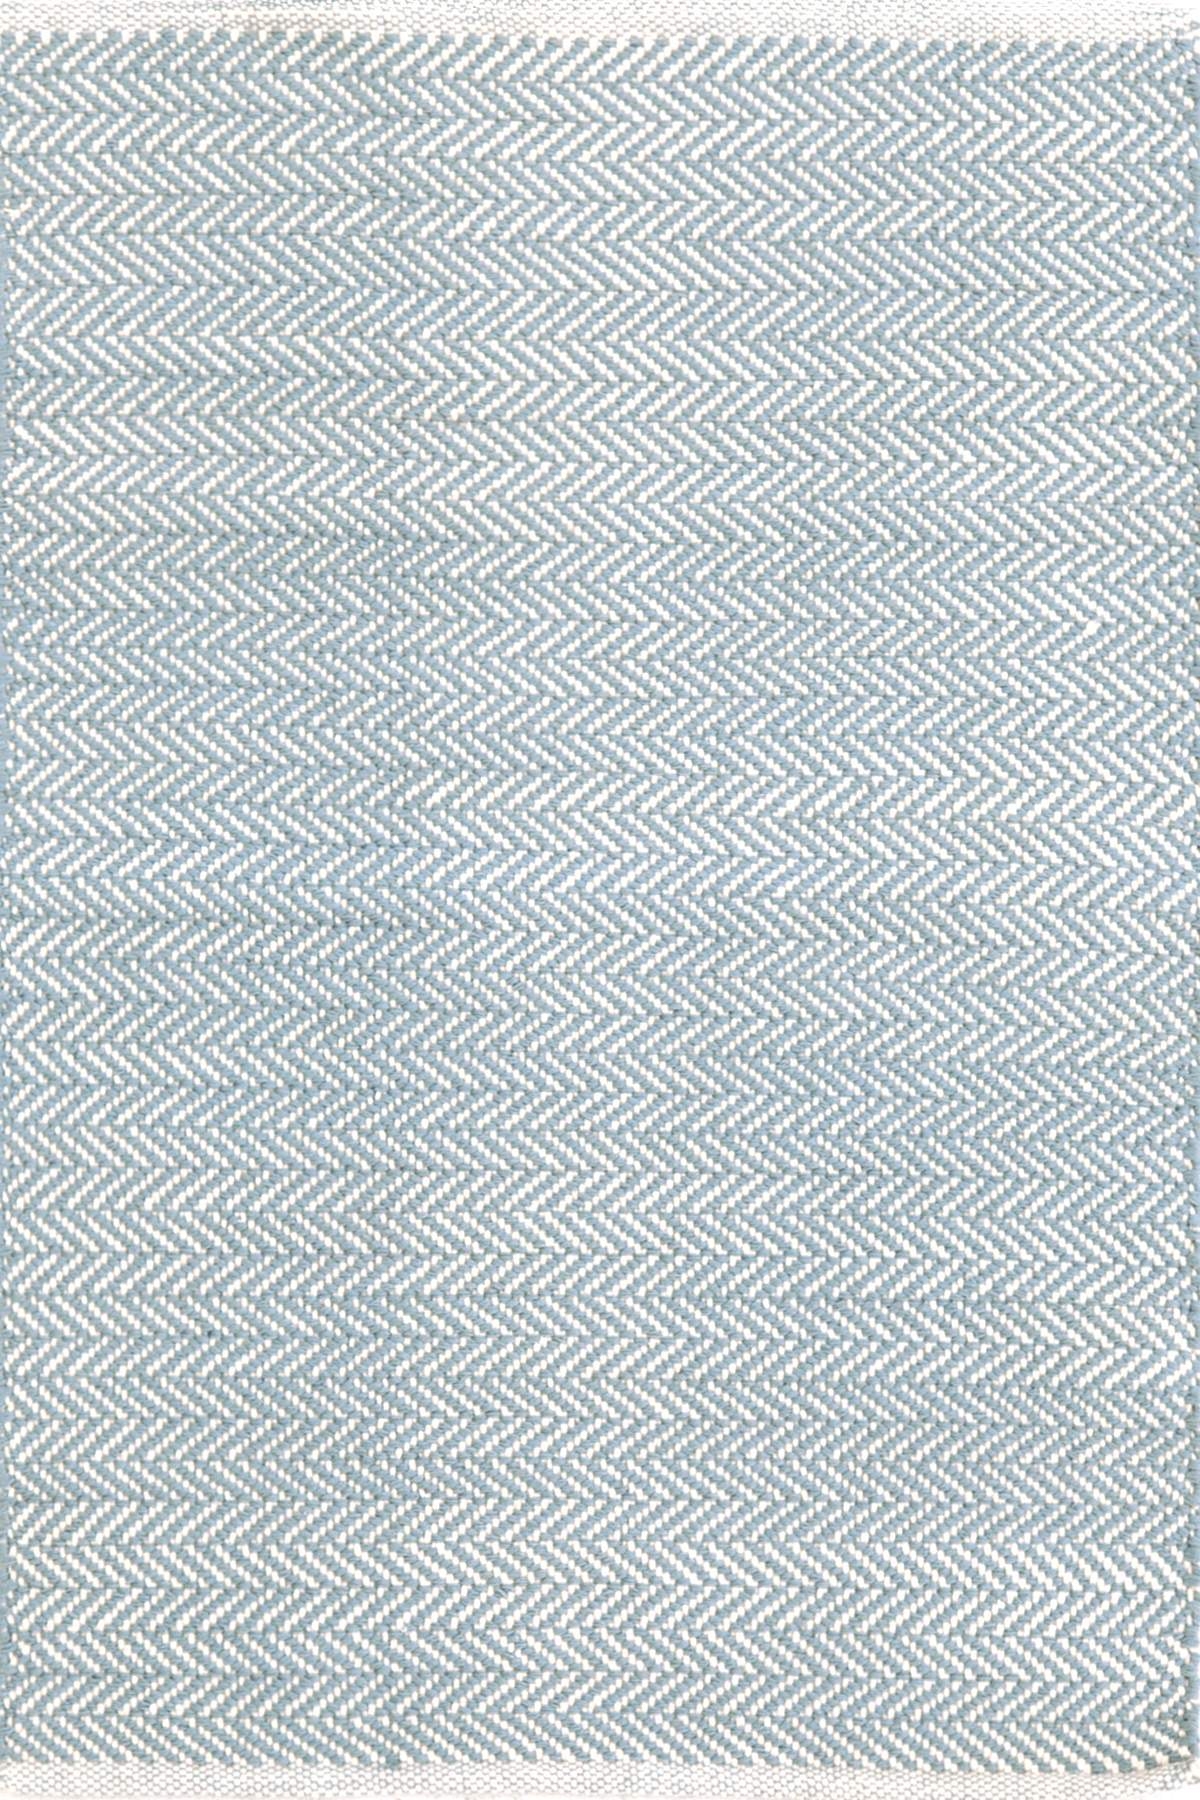 HERRINGBONE SWEDISH BLUE WOVEN COTTON RUG 6' x 9' - Image 0